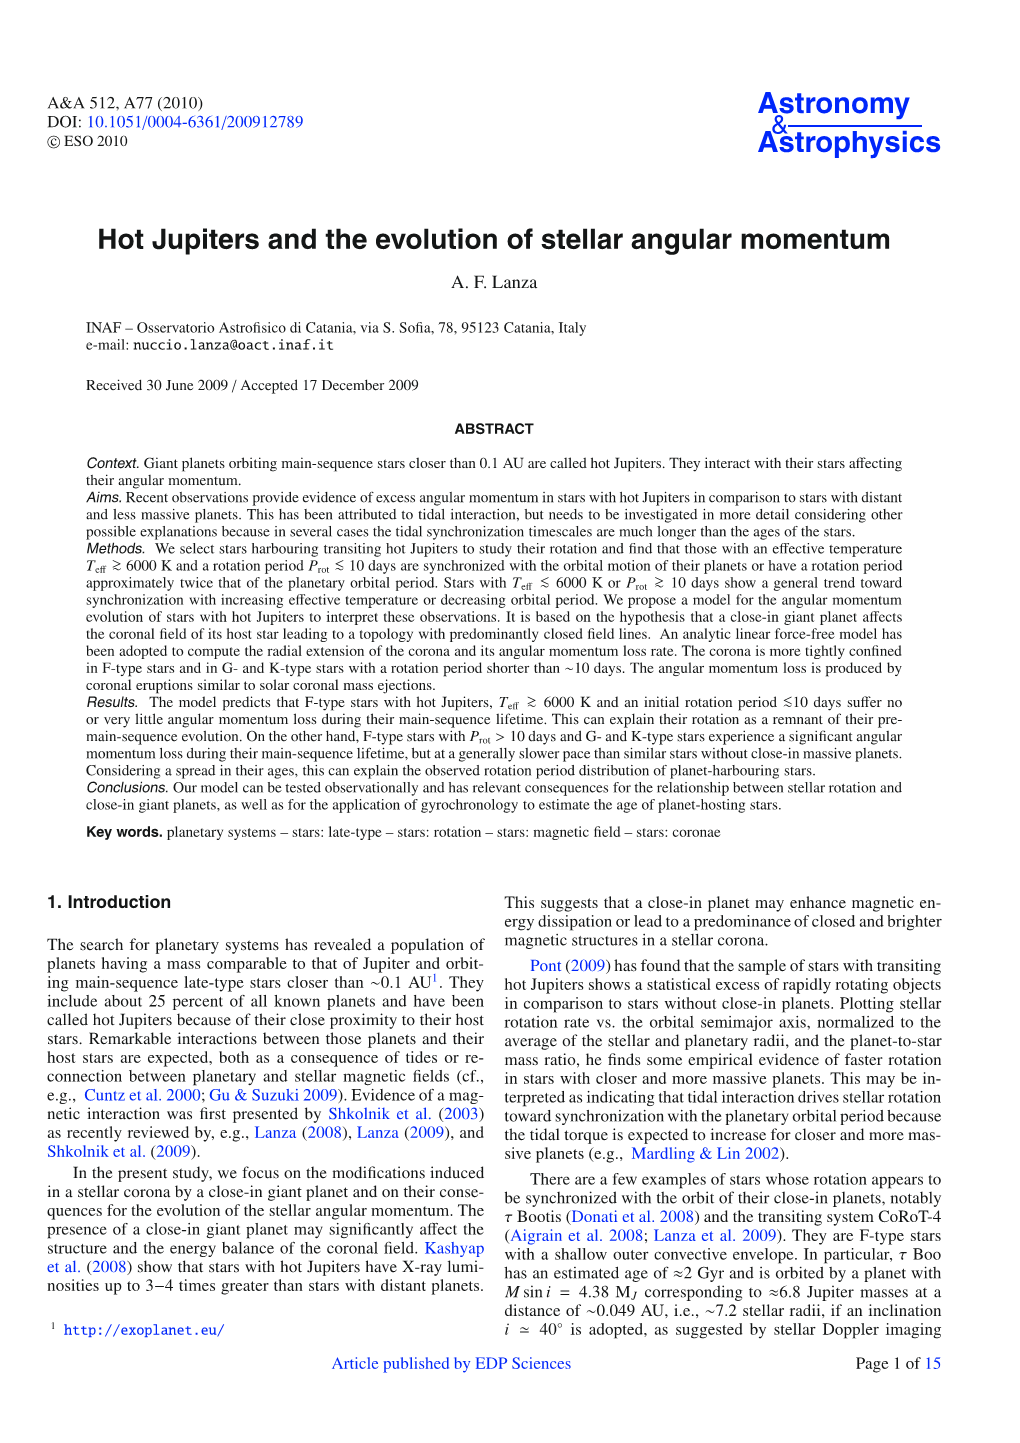 Hot Jupiters and the Evolution of Stellar Angular Momentum